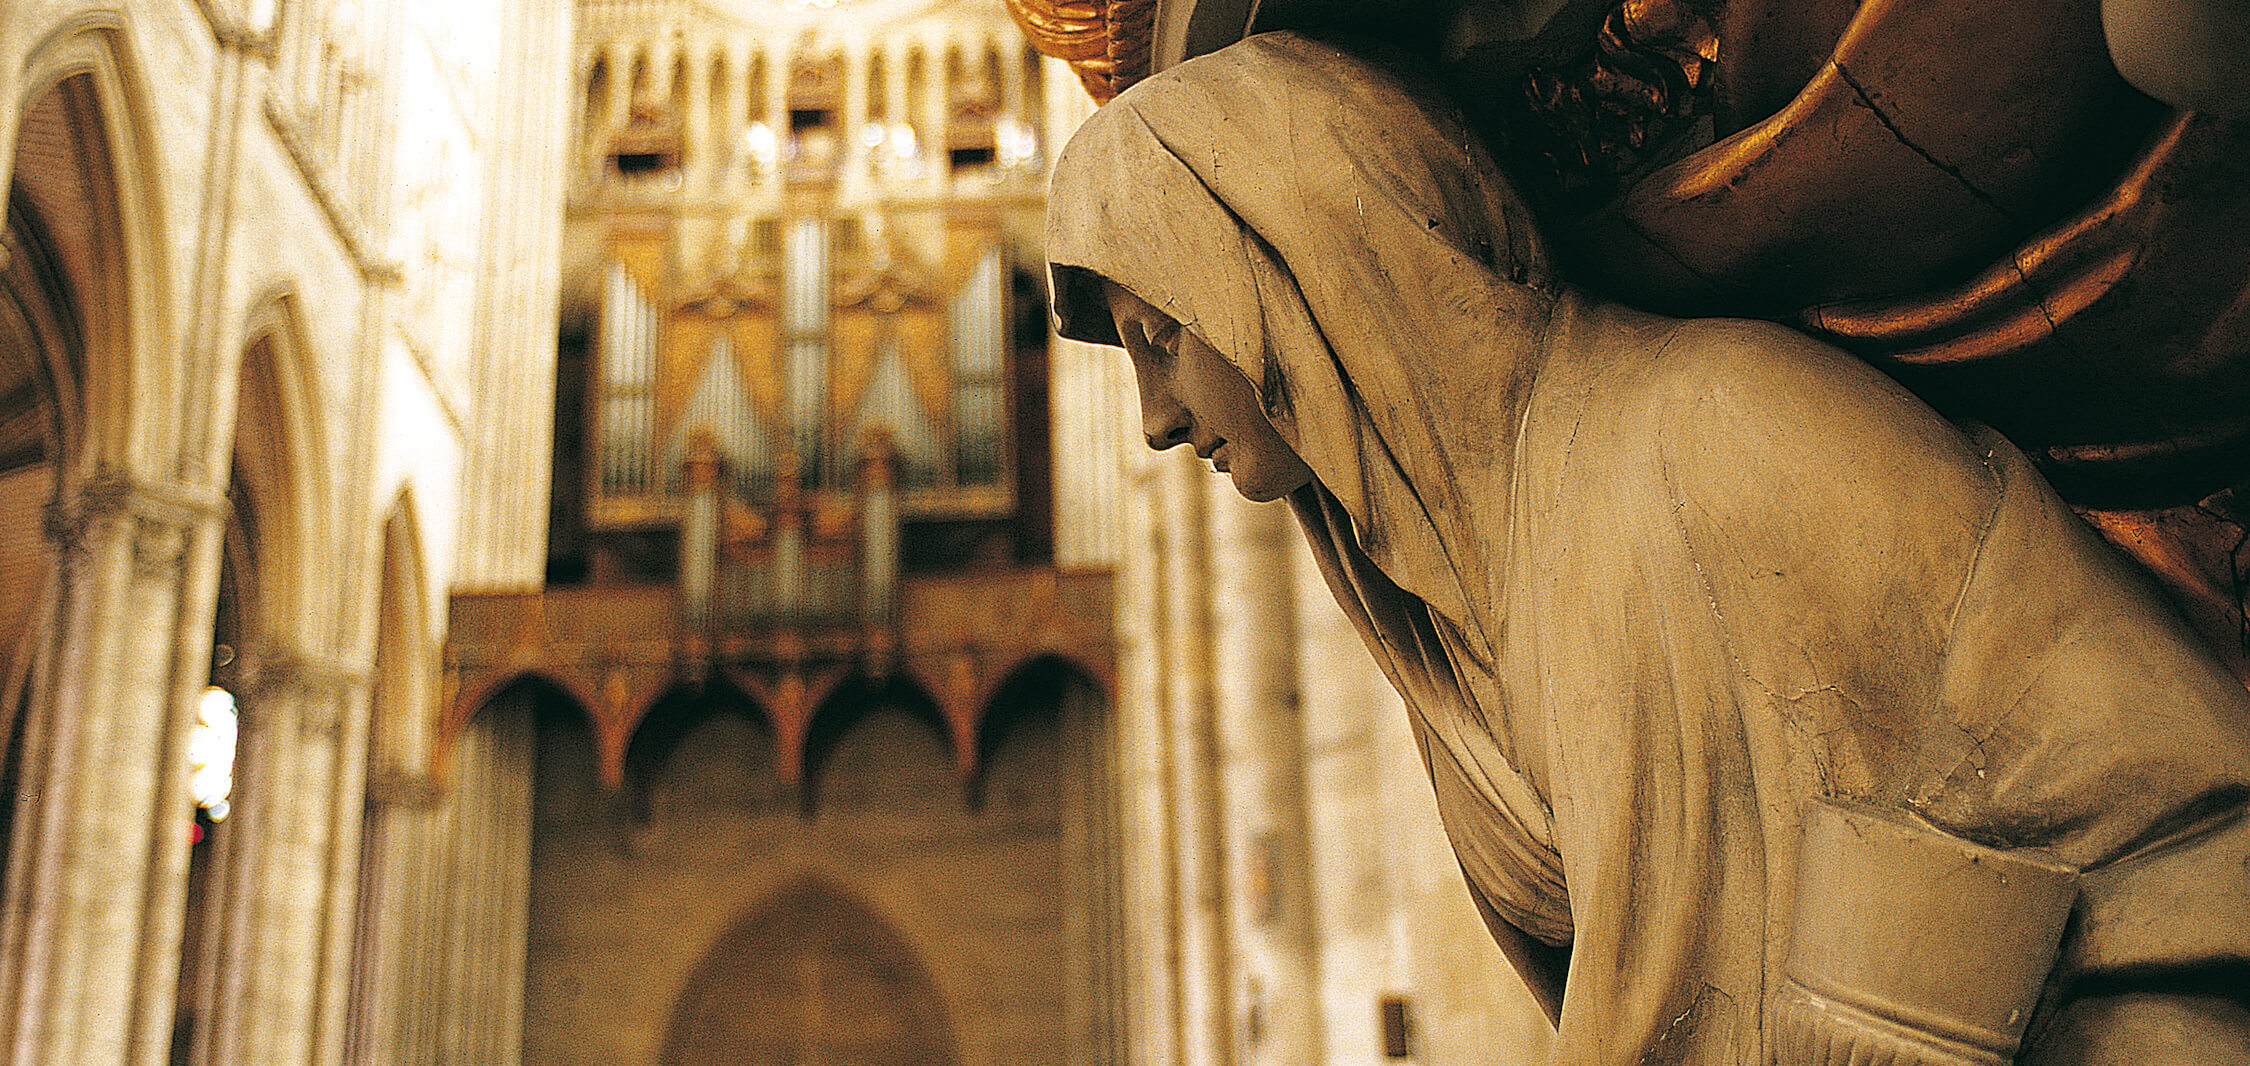 Cathédrale Notre-Dame©ACIR / JJ Gelbart